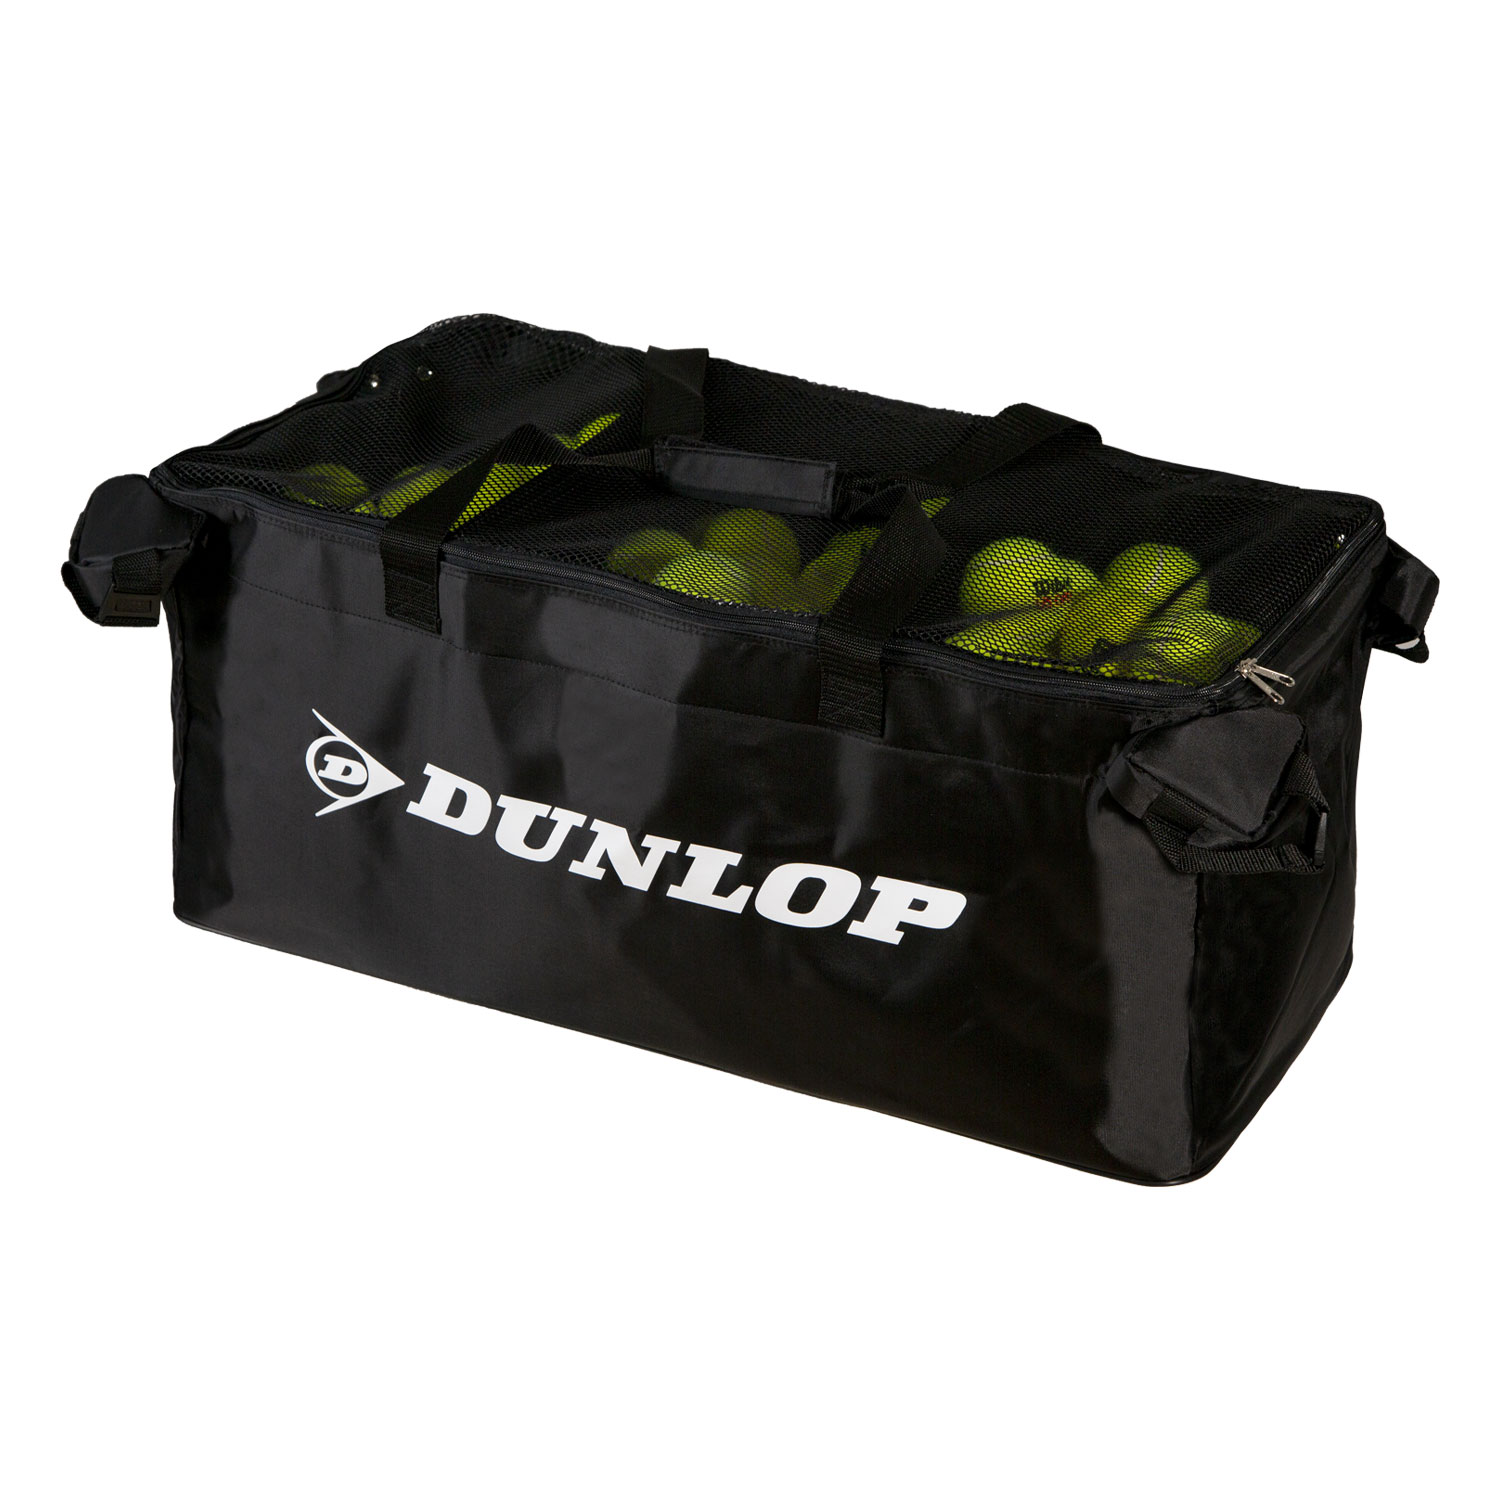 Dunlop Teaching x 250 Cart Balls Bag - Black